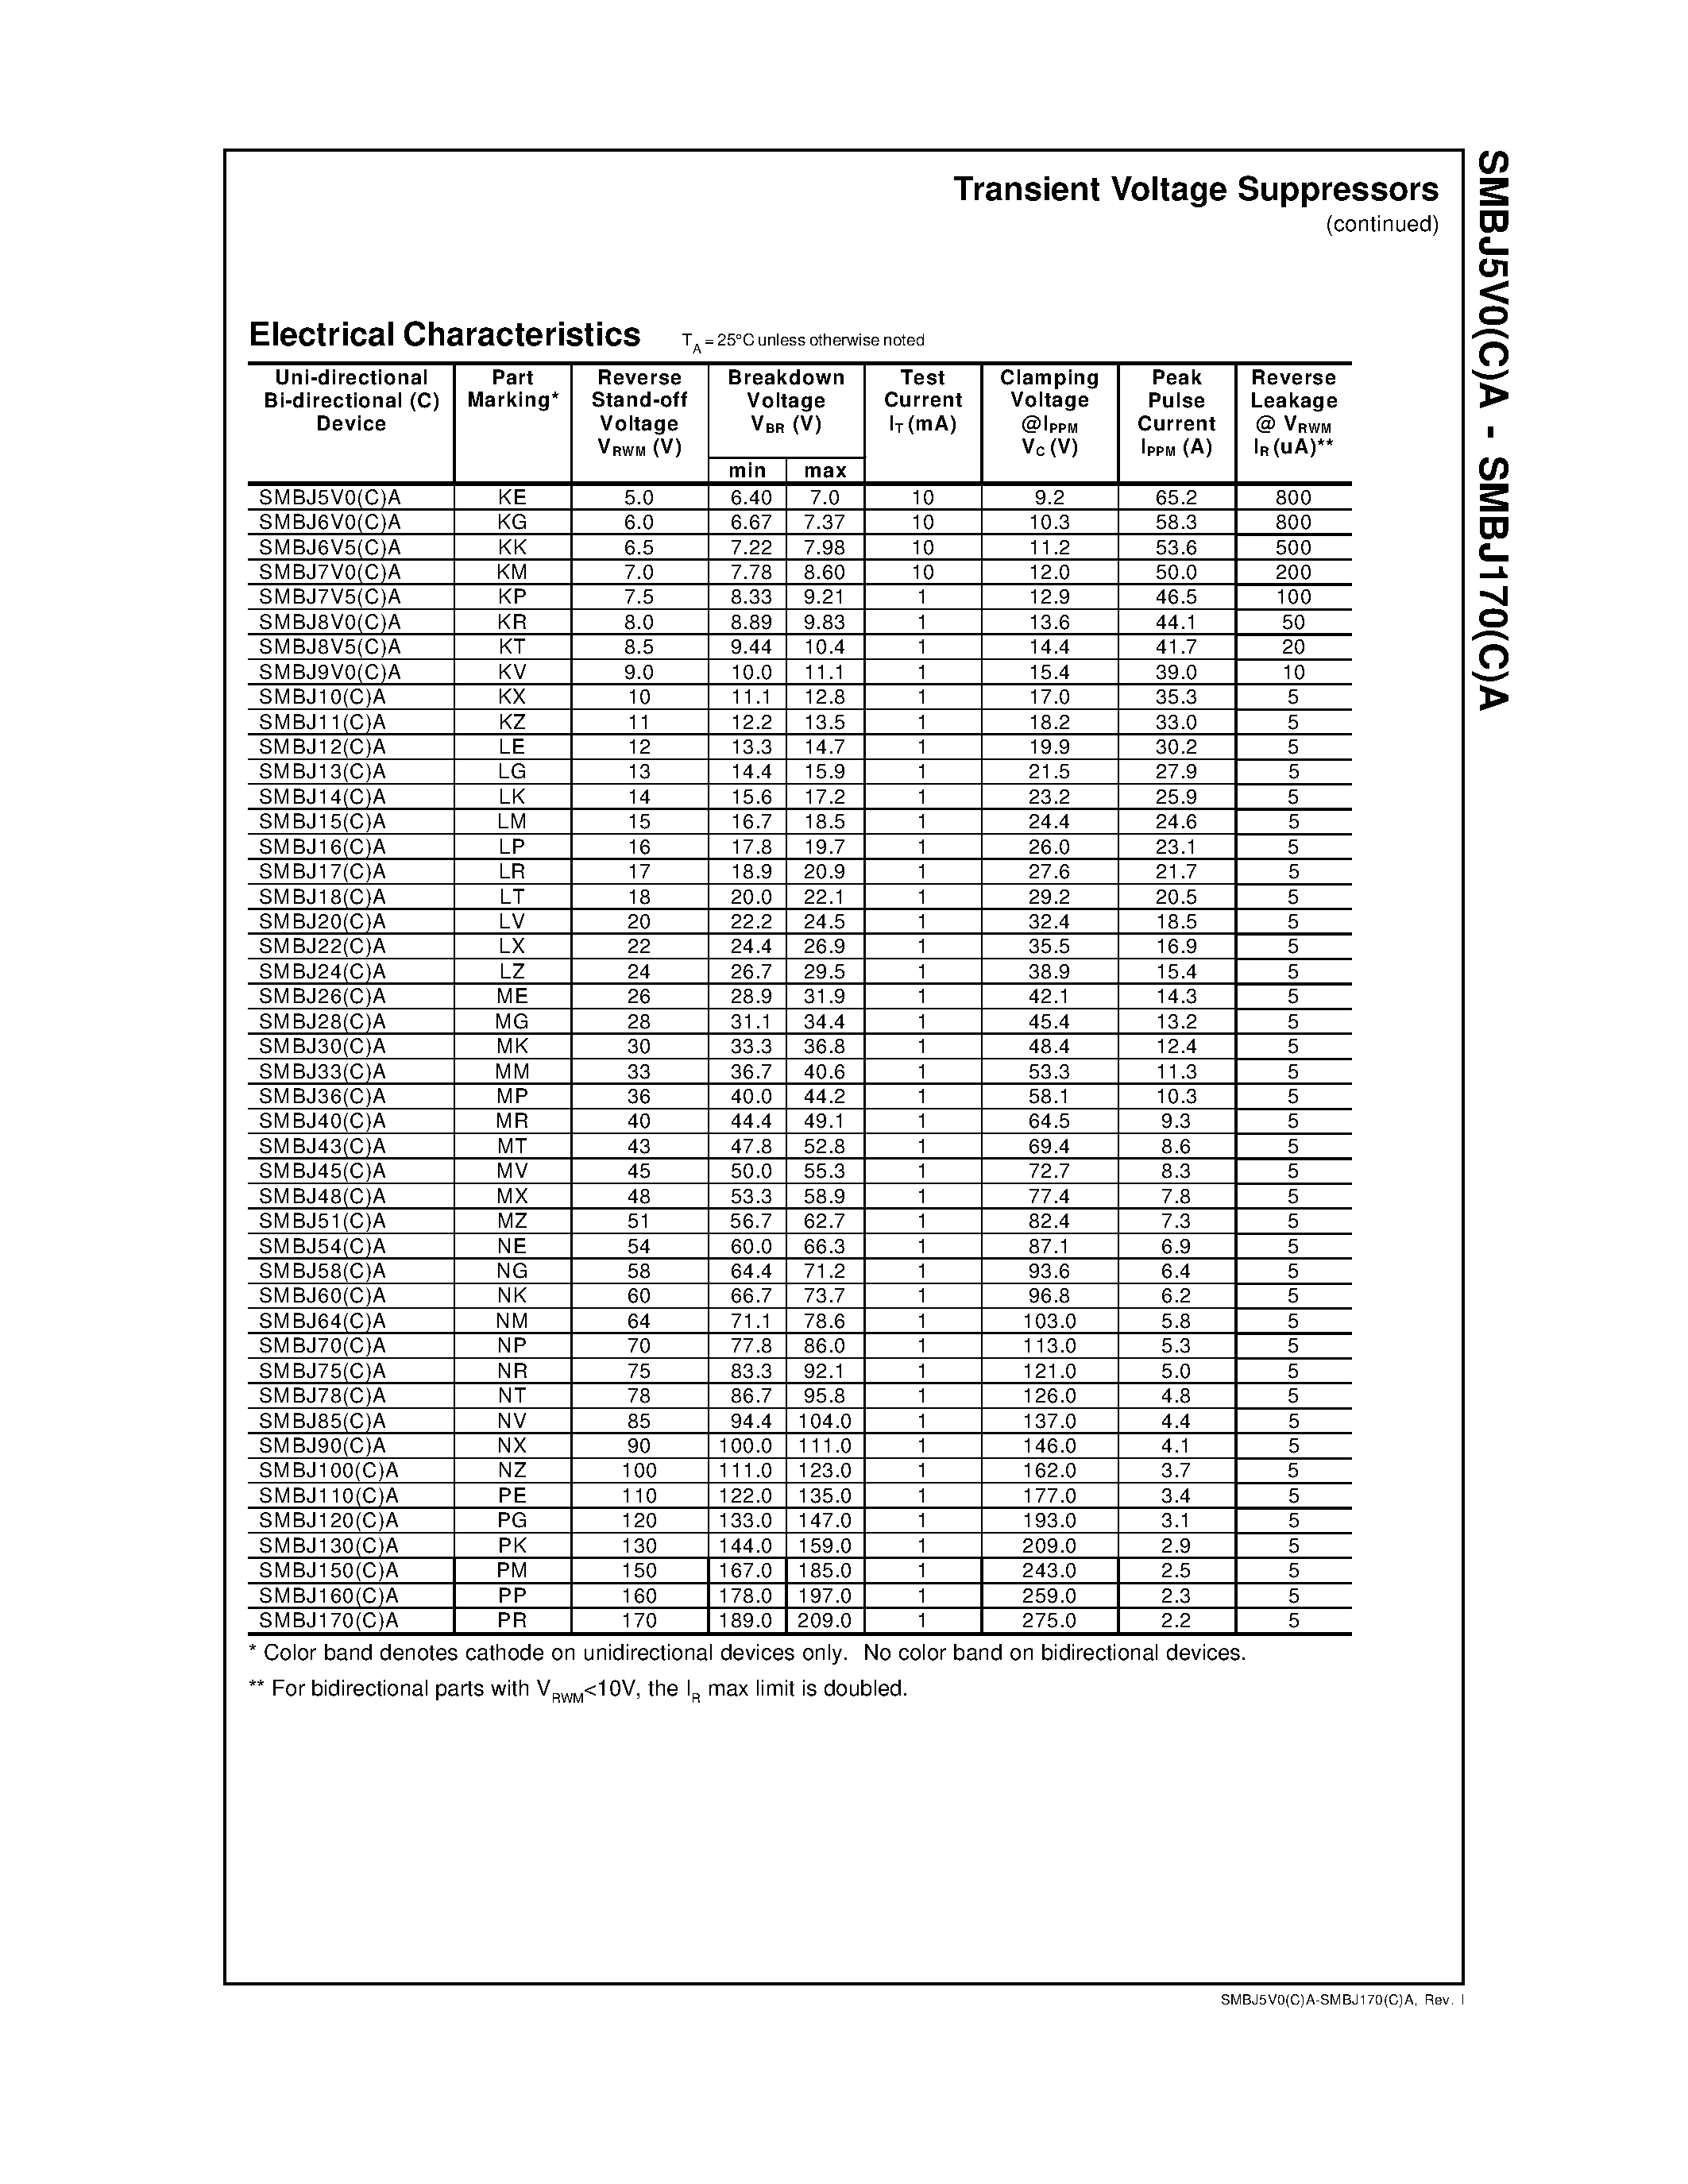 Datasheet SMBJ26A - Transient Voltage Suppressors SMBJ5V0(C)A - SMBJ170(C)A page 2